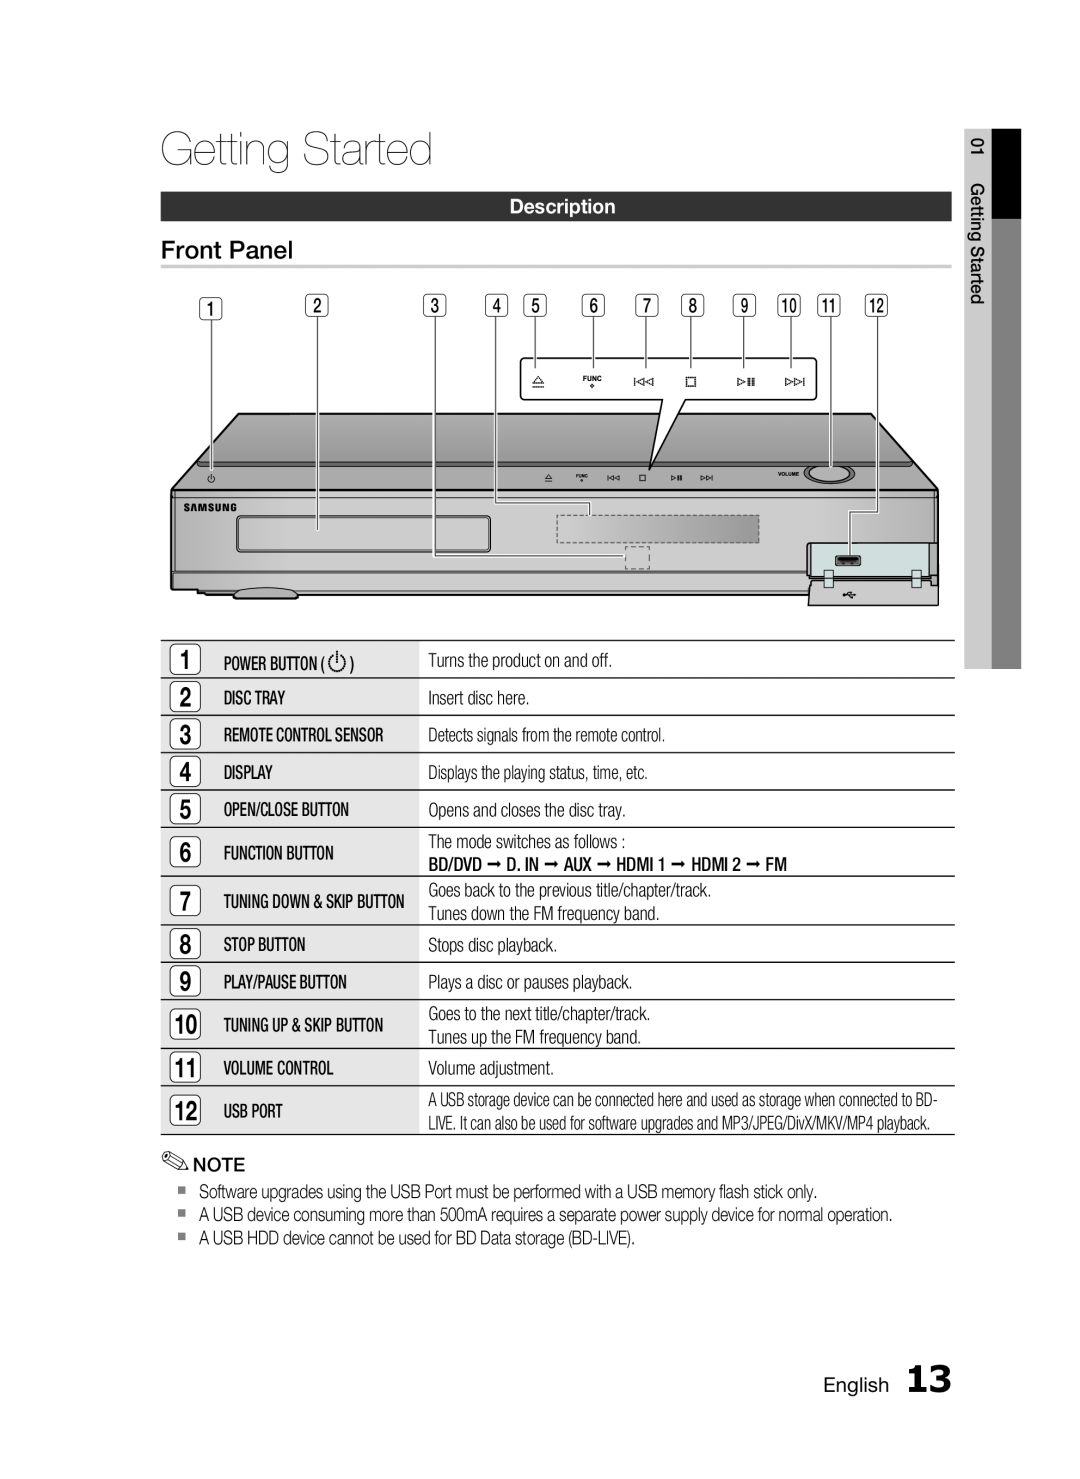 Samsung HT-C5200 user manual Front Panel, Description, Getting Started 